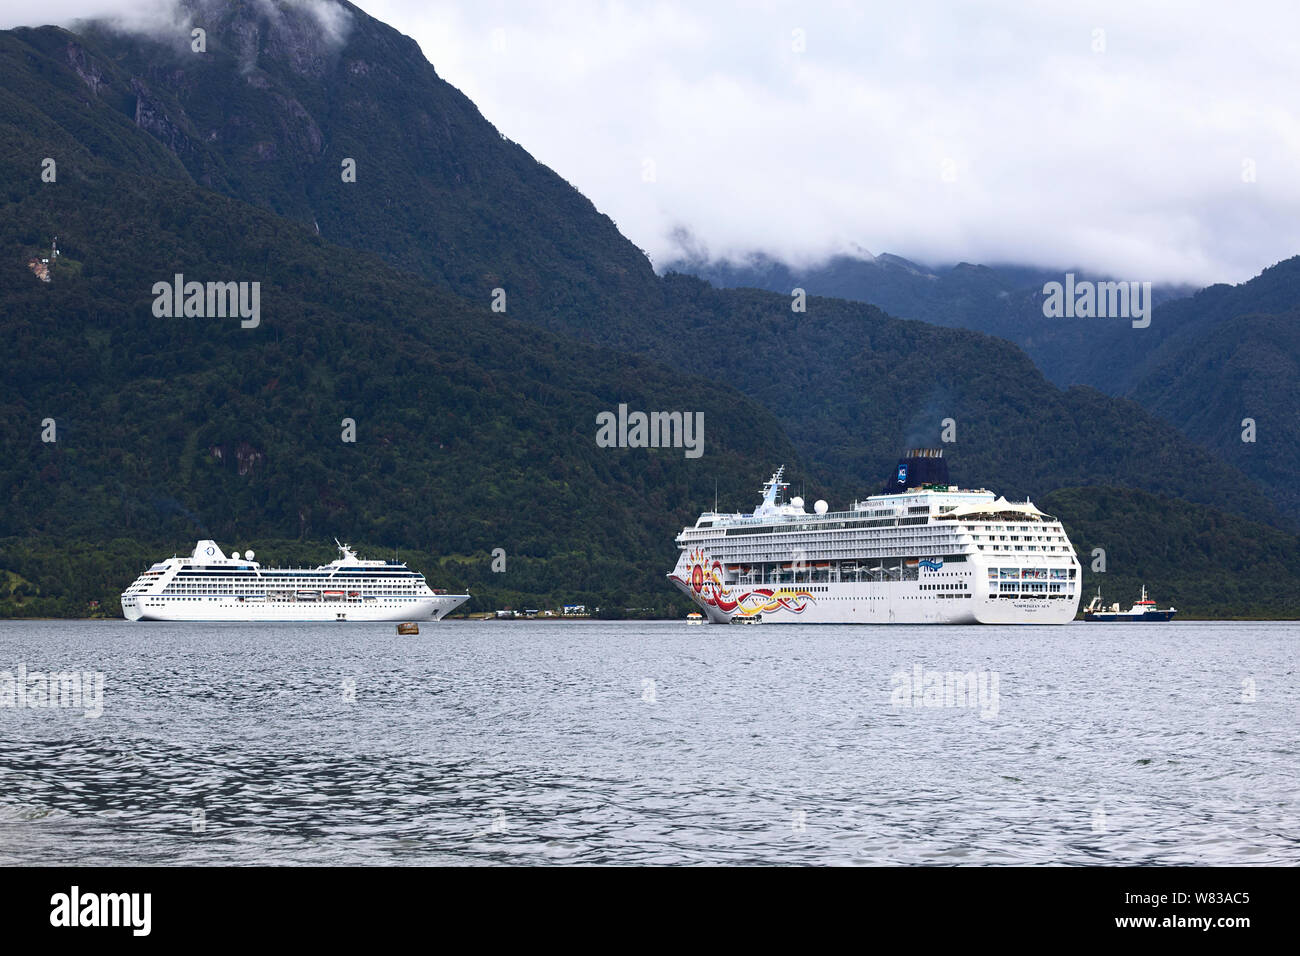 PUERTO CHACABUCO, Cile - 16 febbraio 2016: navi da crociera nel fiordo Aisen a Puerto Chacabuco, Aysen Regione, Cile Foto Stock